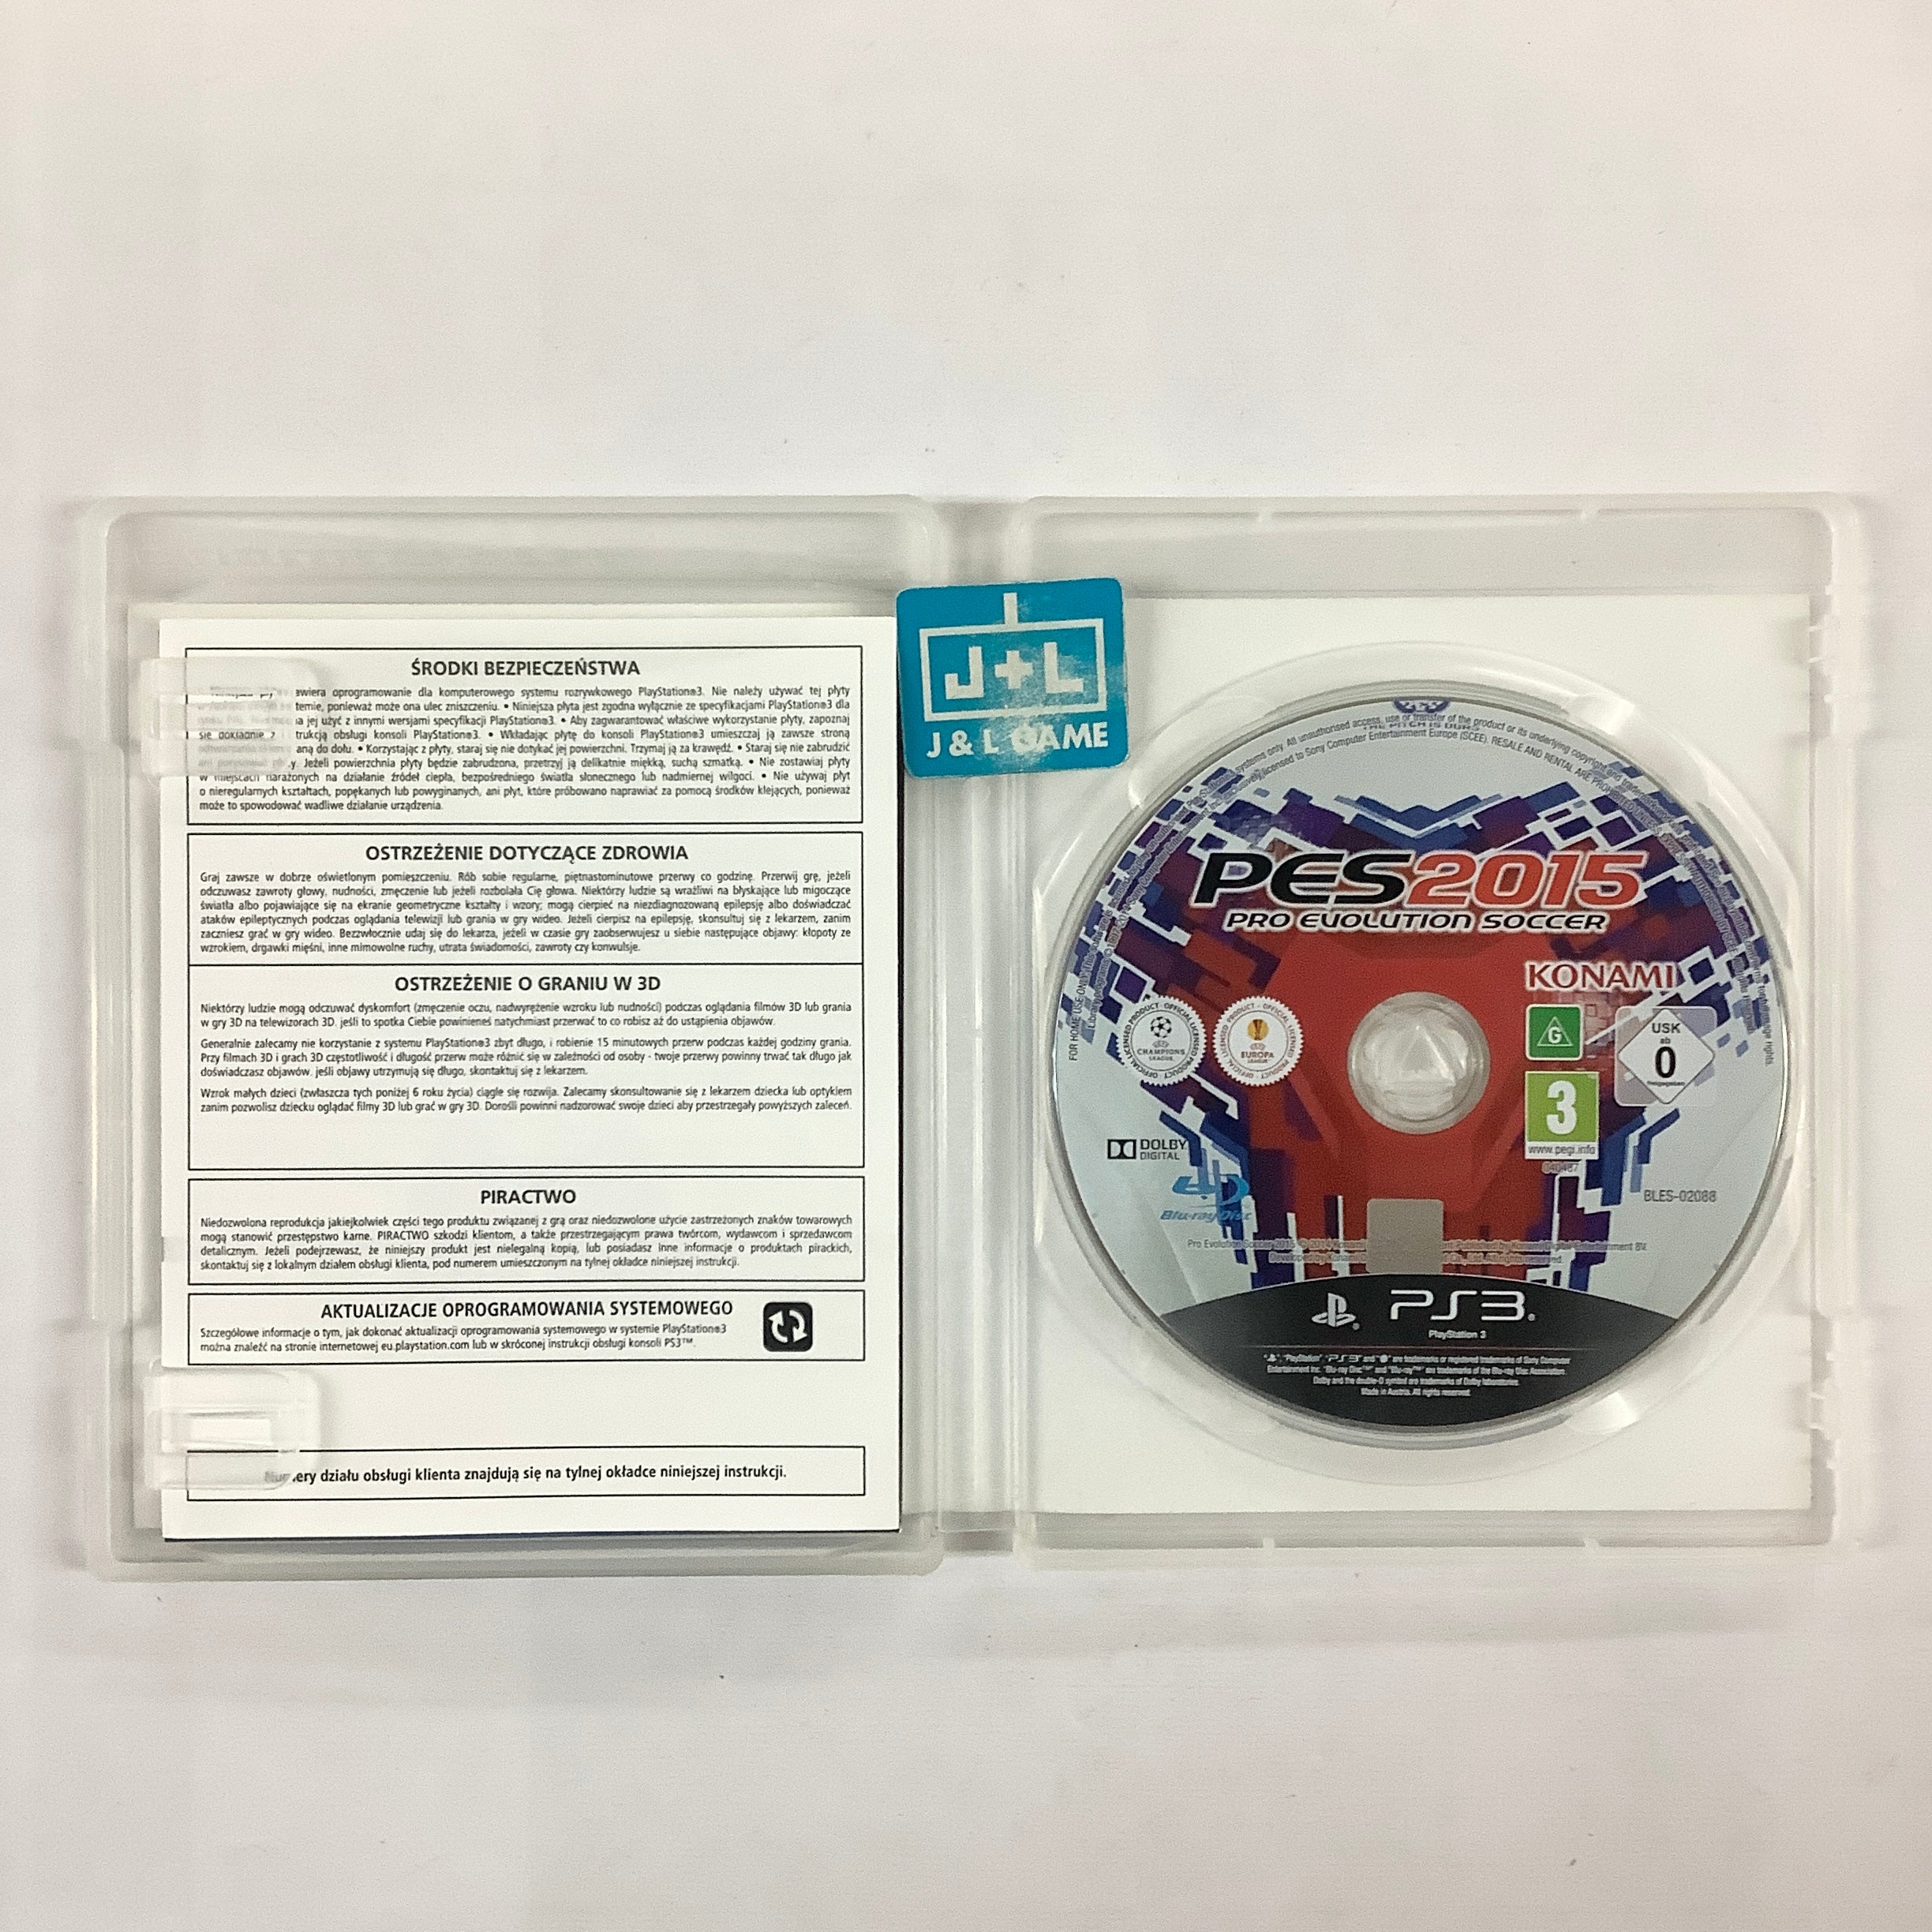 Pro Evolution Soccer 2015 (Polish) - (PS3) Playstation 3 [Pre-Owned] (European Import) Video Games Konami   